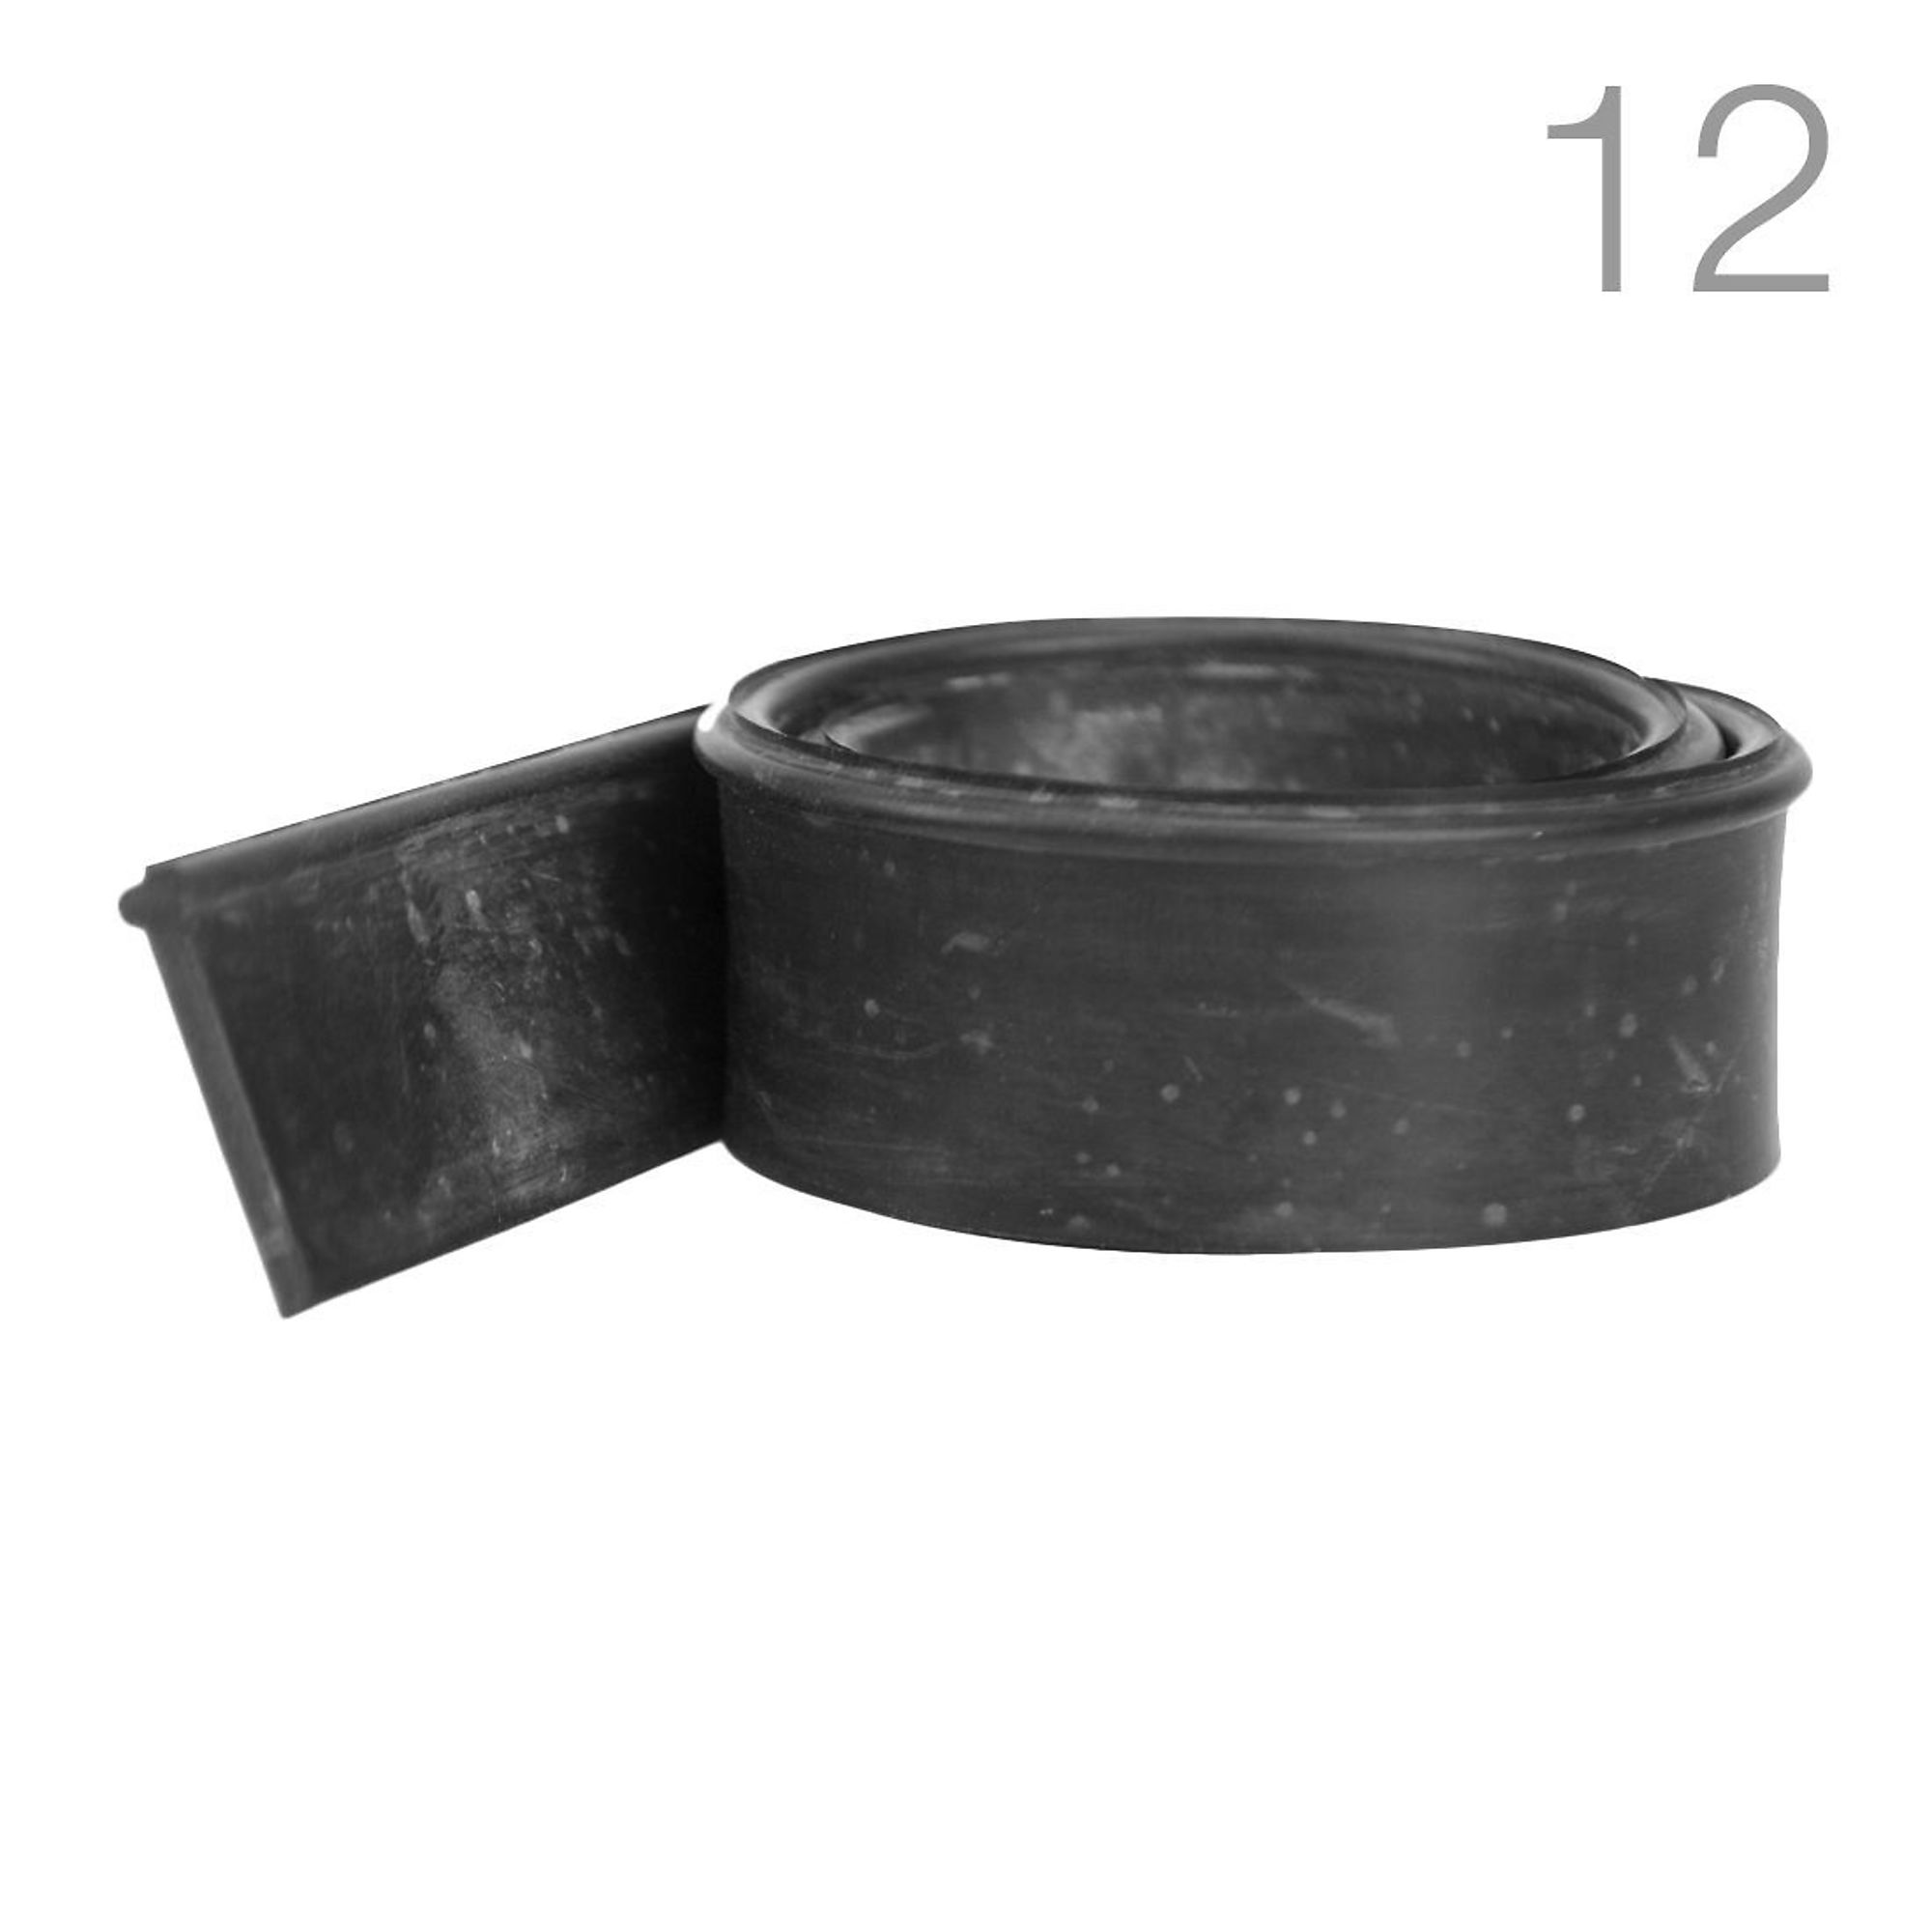 BlackDiamond, Flat Top Medium Squeegee Rubber 12 Pack - 37Inch, Model 012-05-54